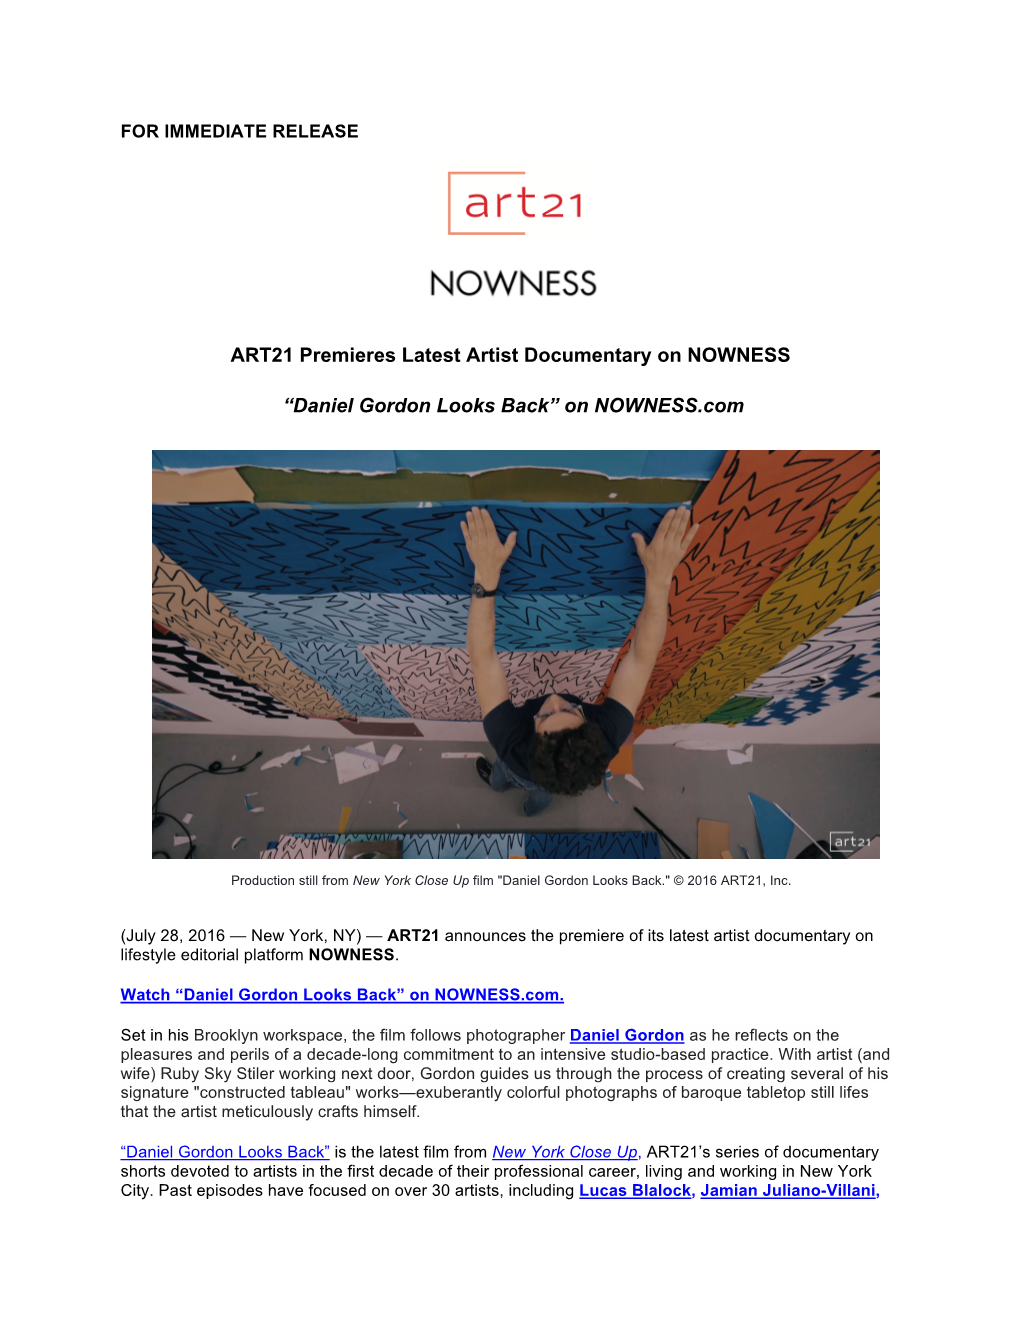 ART21 Premieres Latest Artist Documentary on NOWNESS “Daniel Gordon Looks Back” on NOWNESS.Com